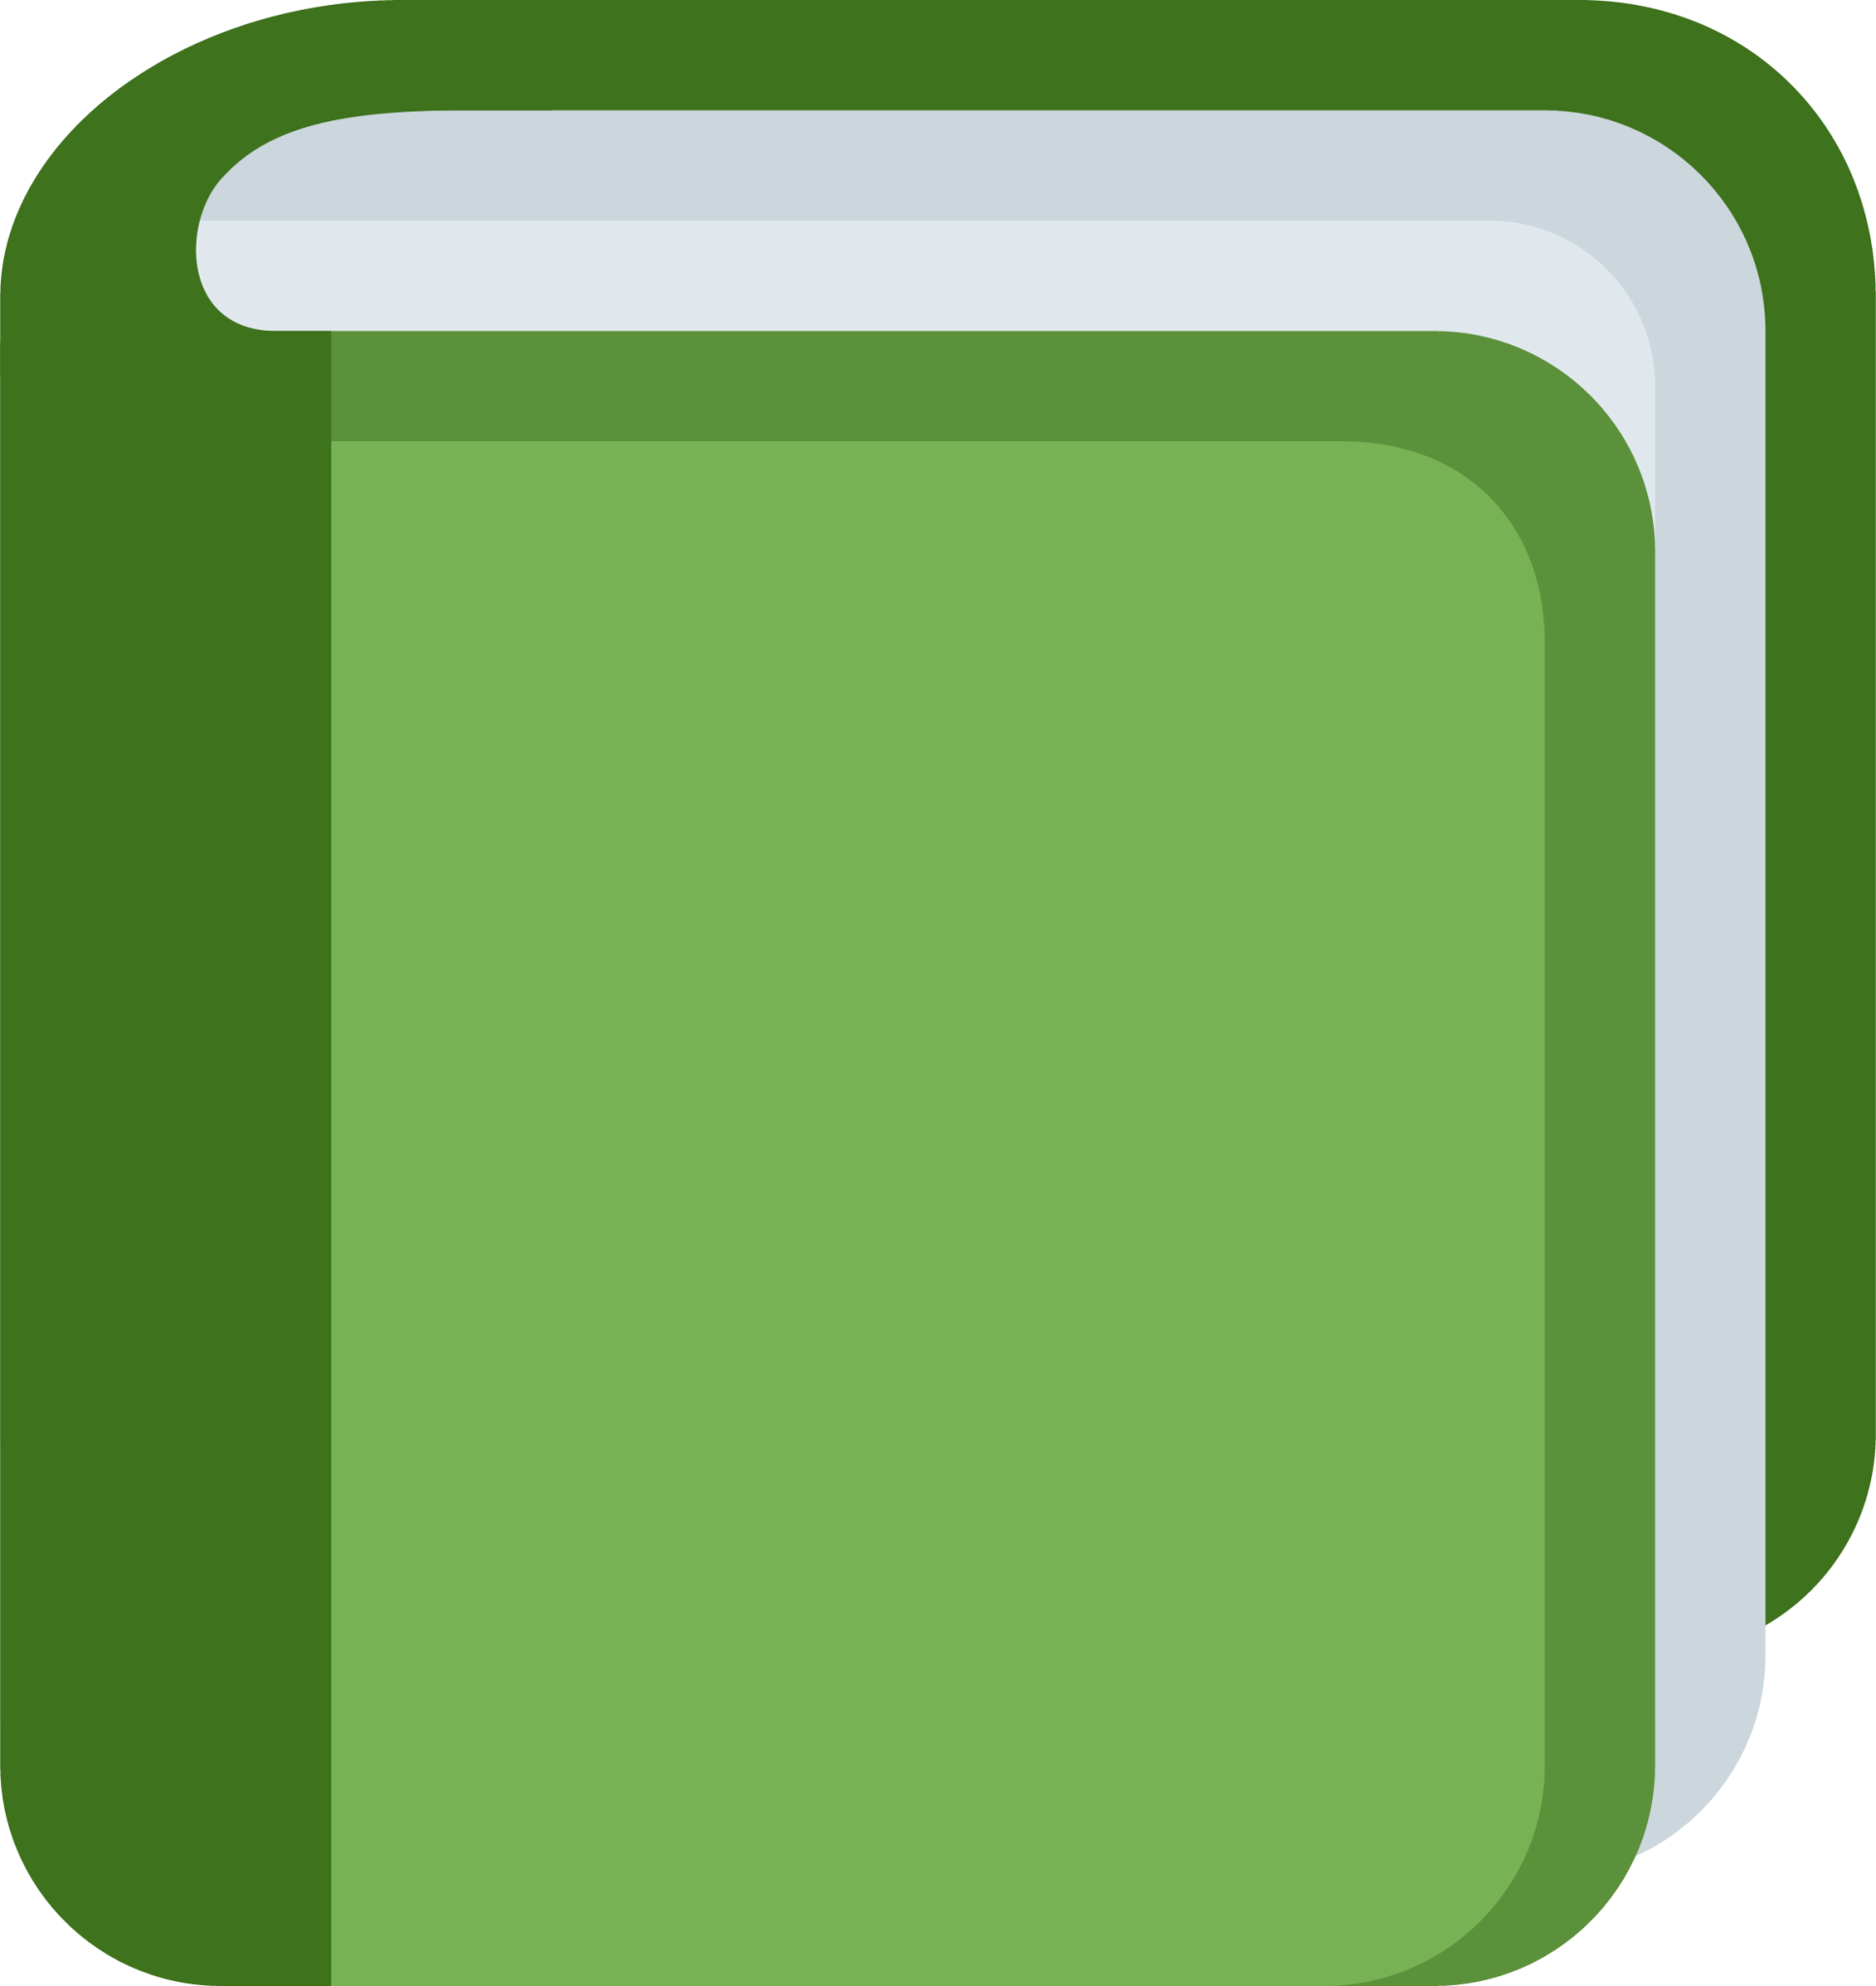 green book emoji